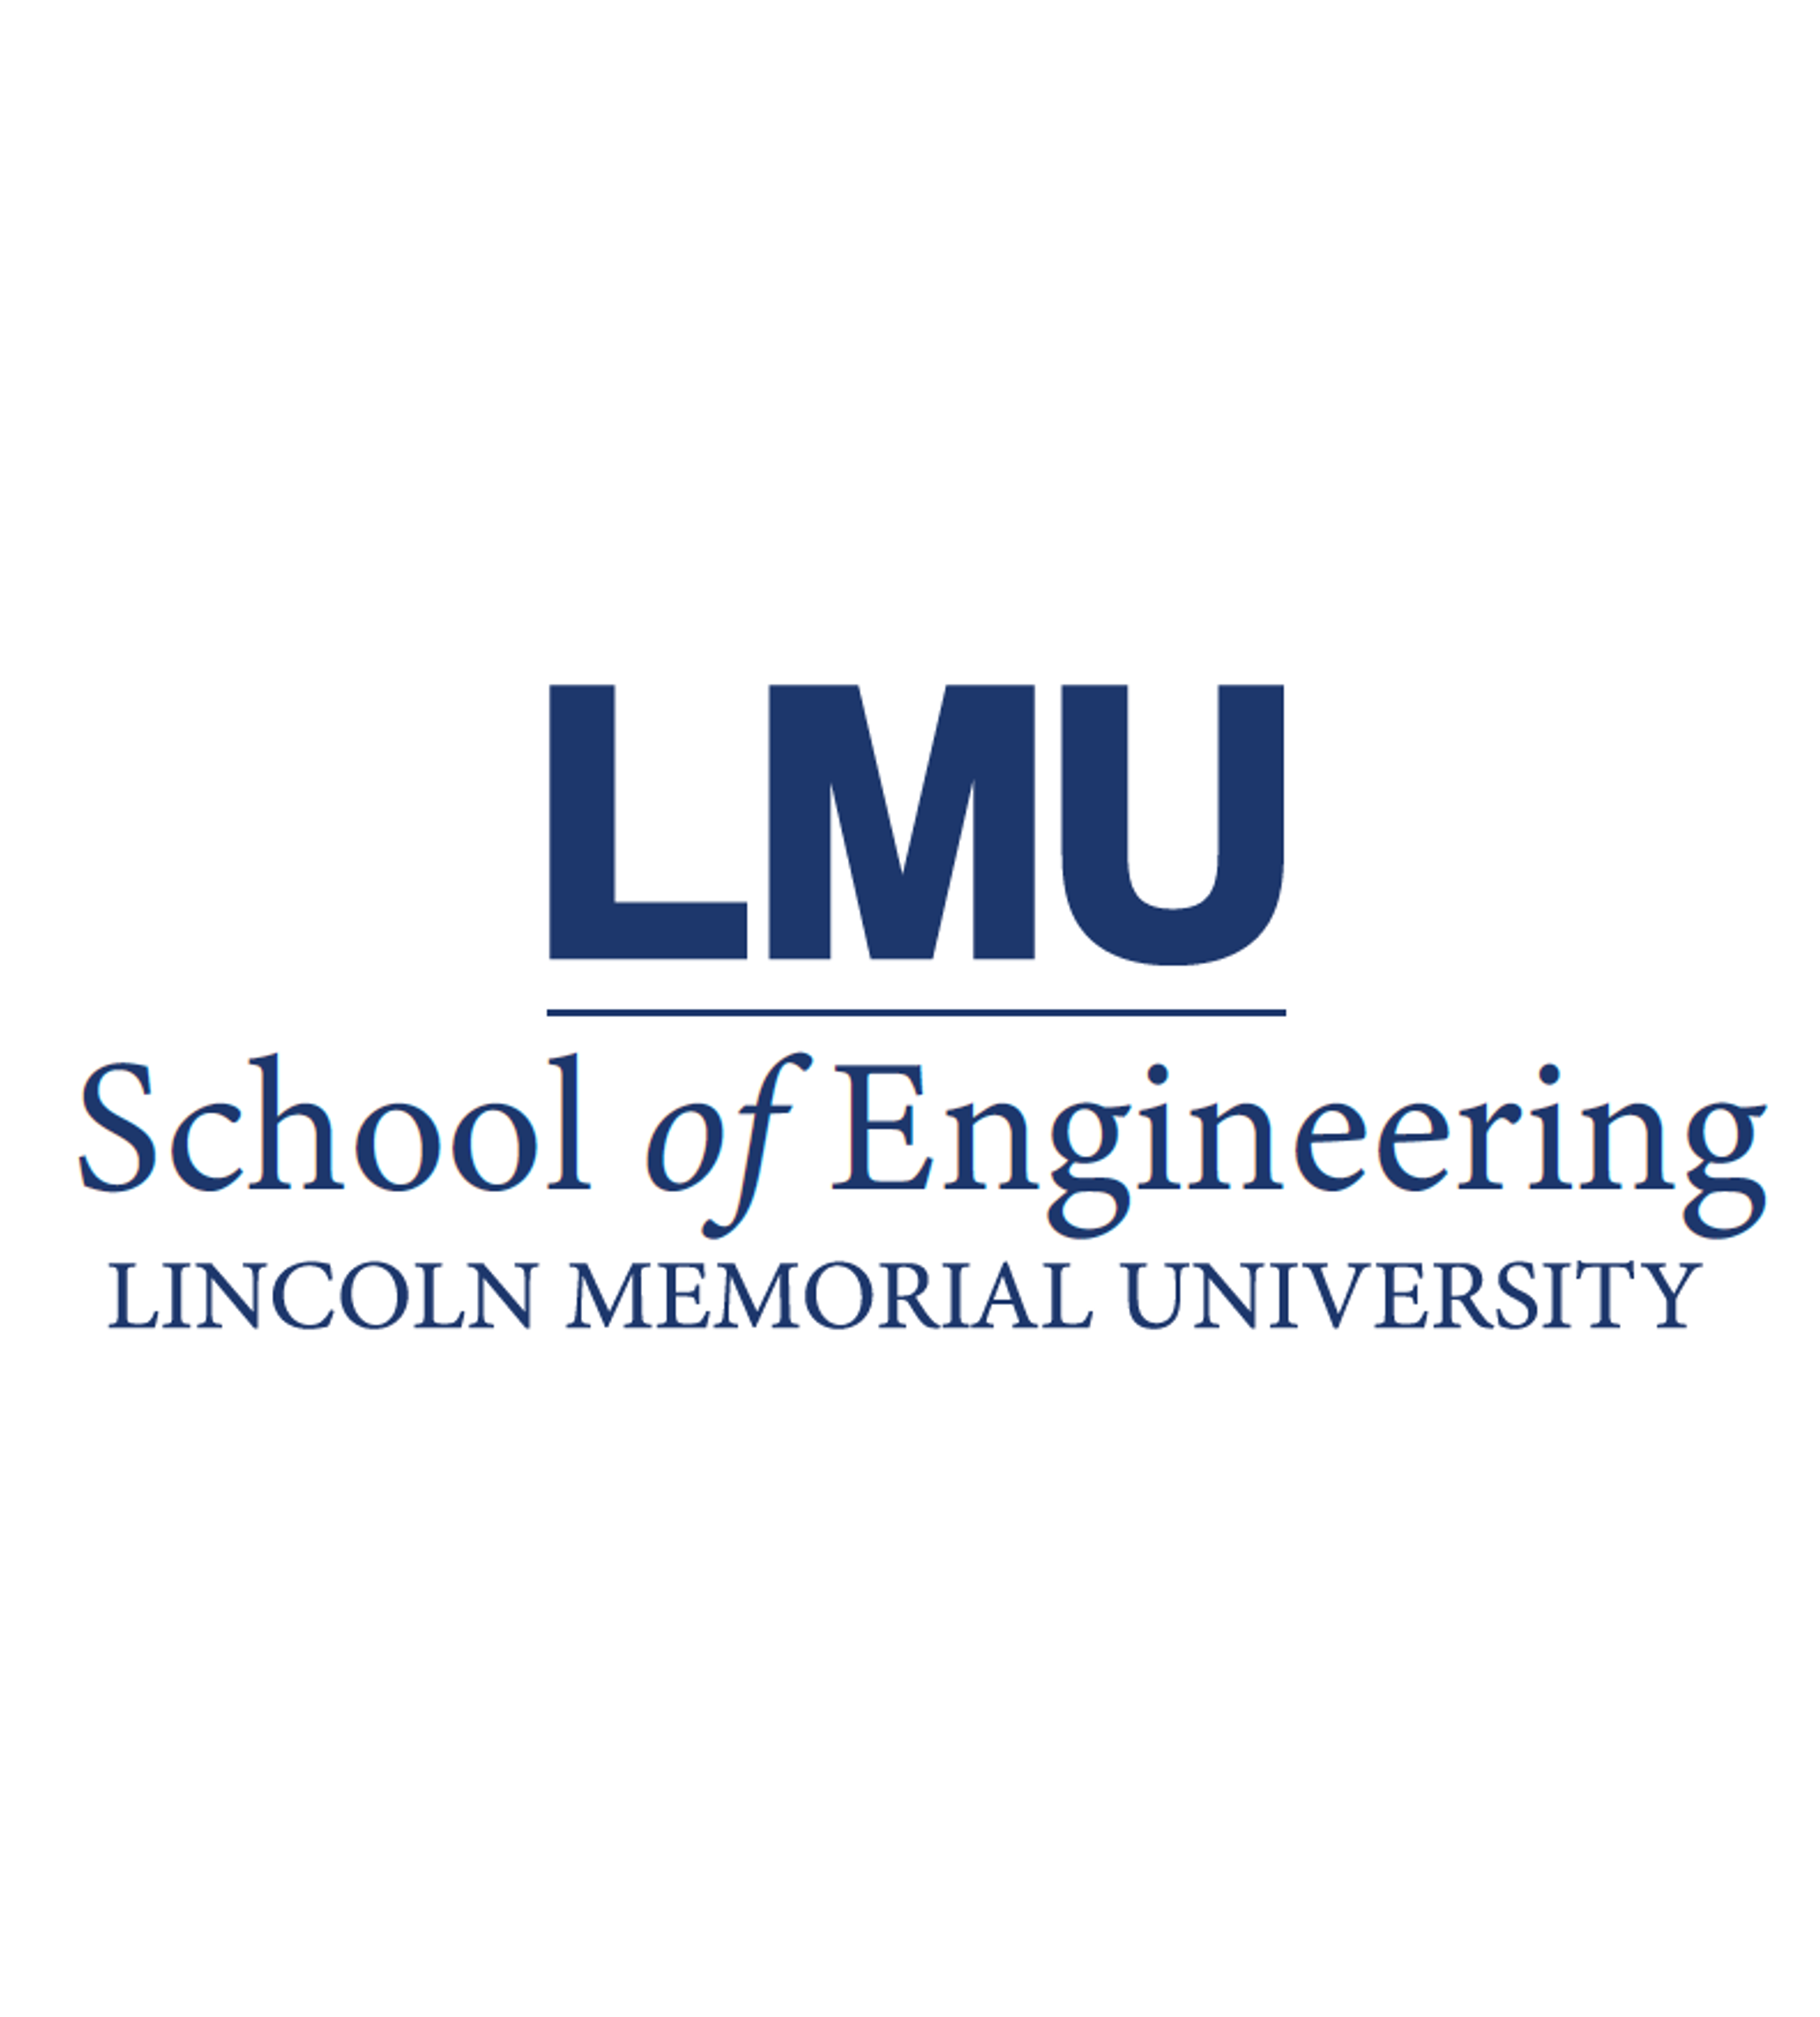 Lincoln Memorial University School of Engineering Logo